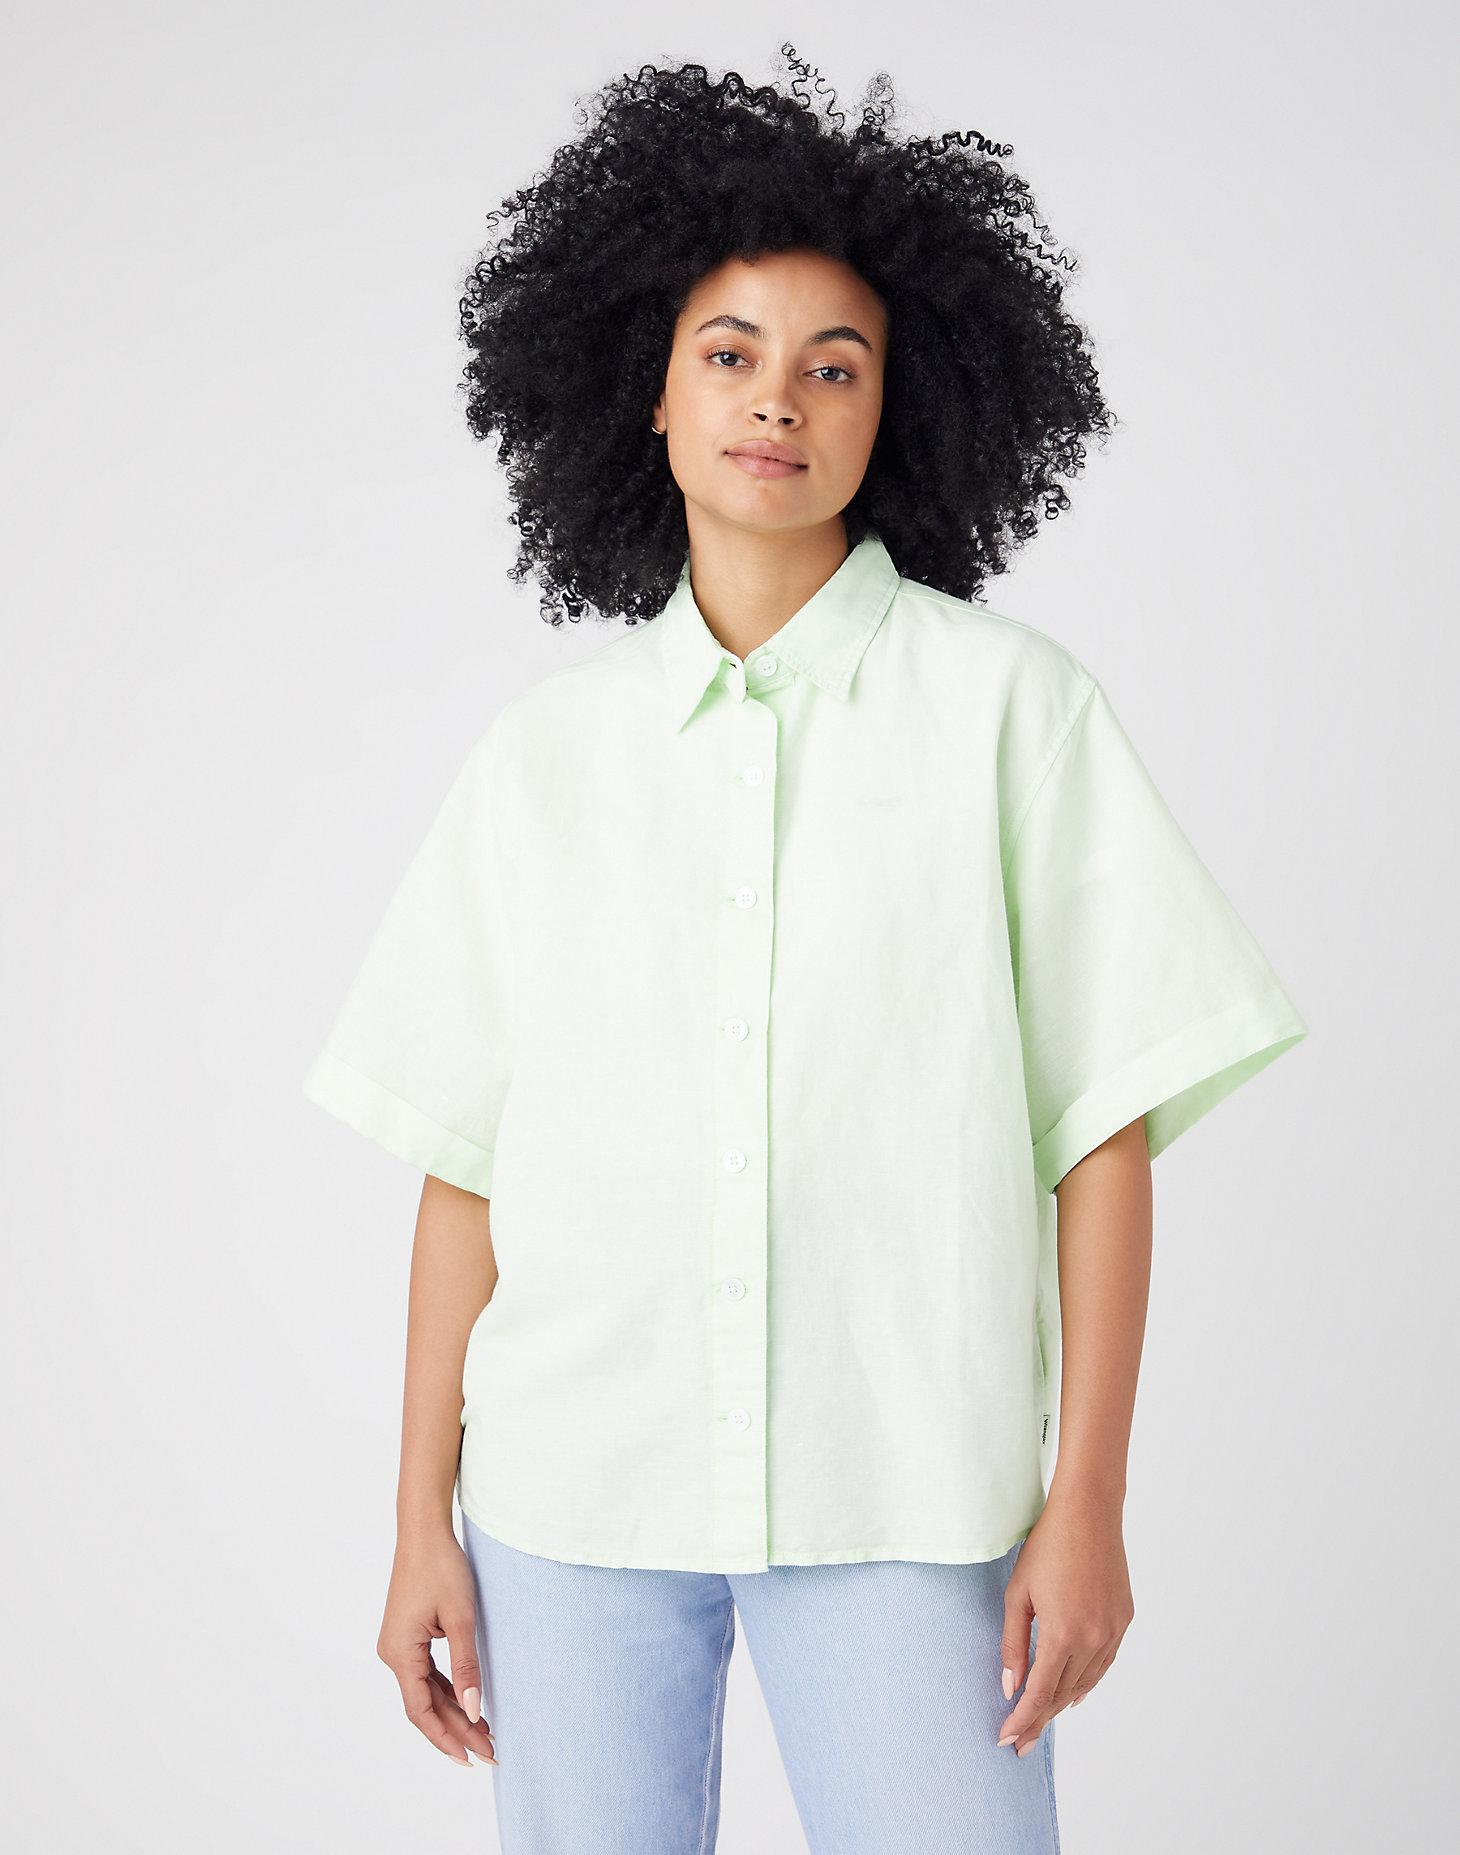 Relaxed Summer Shirt in Seacrest Green alternative view 1